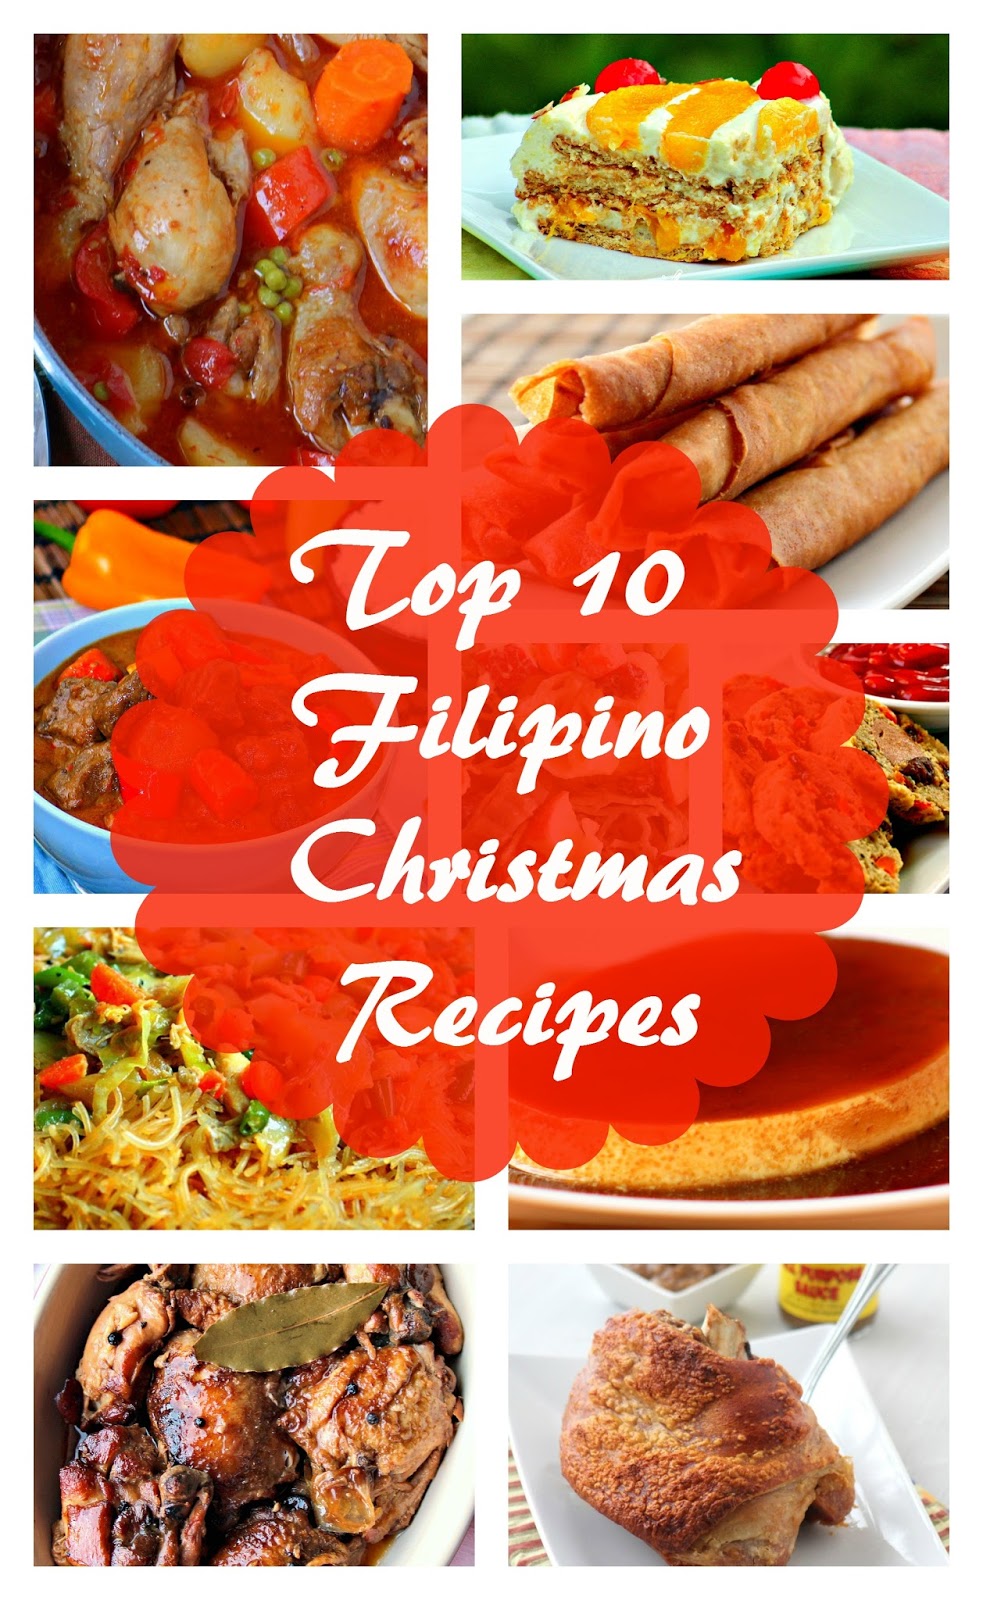 Top 10 Filipino Recipes for Christmas